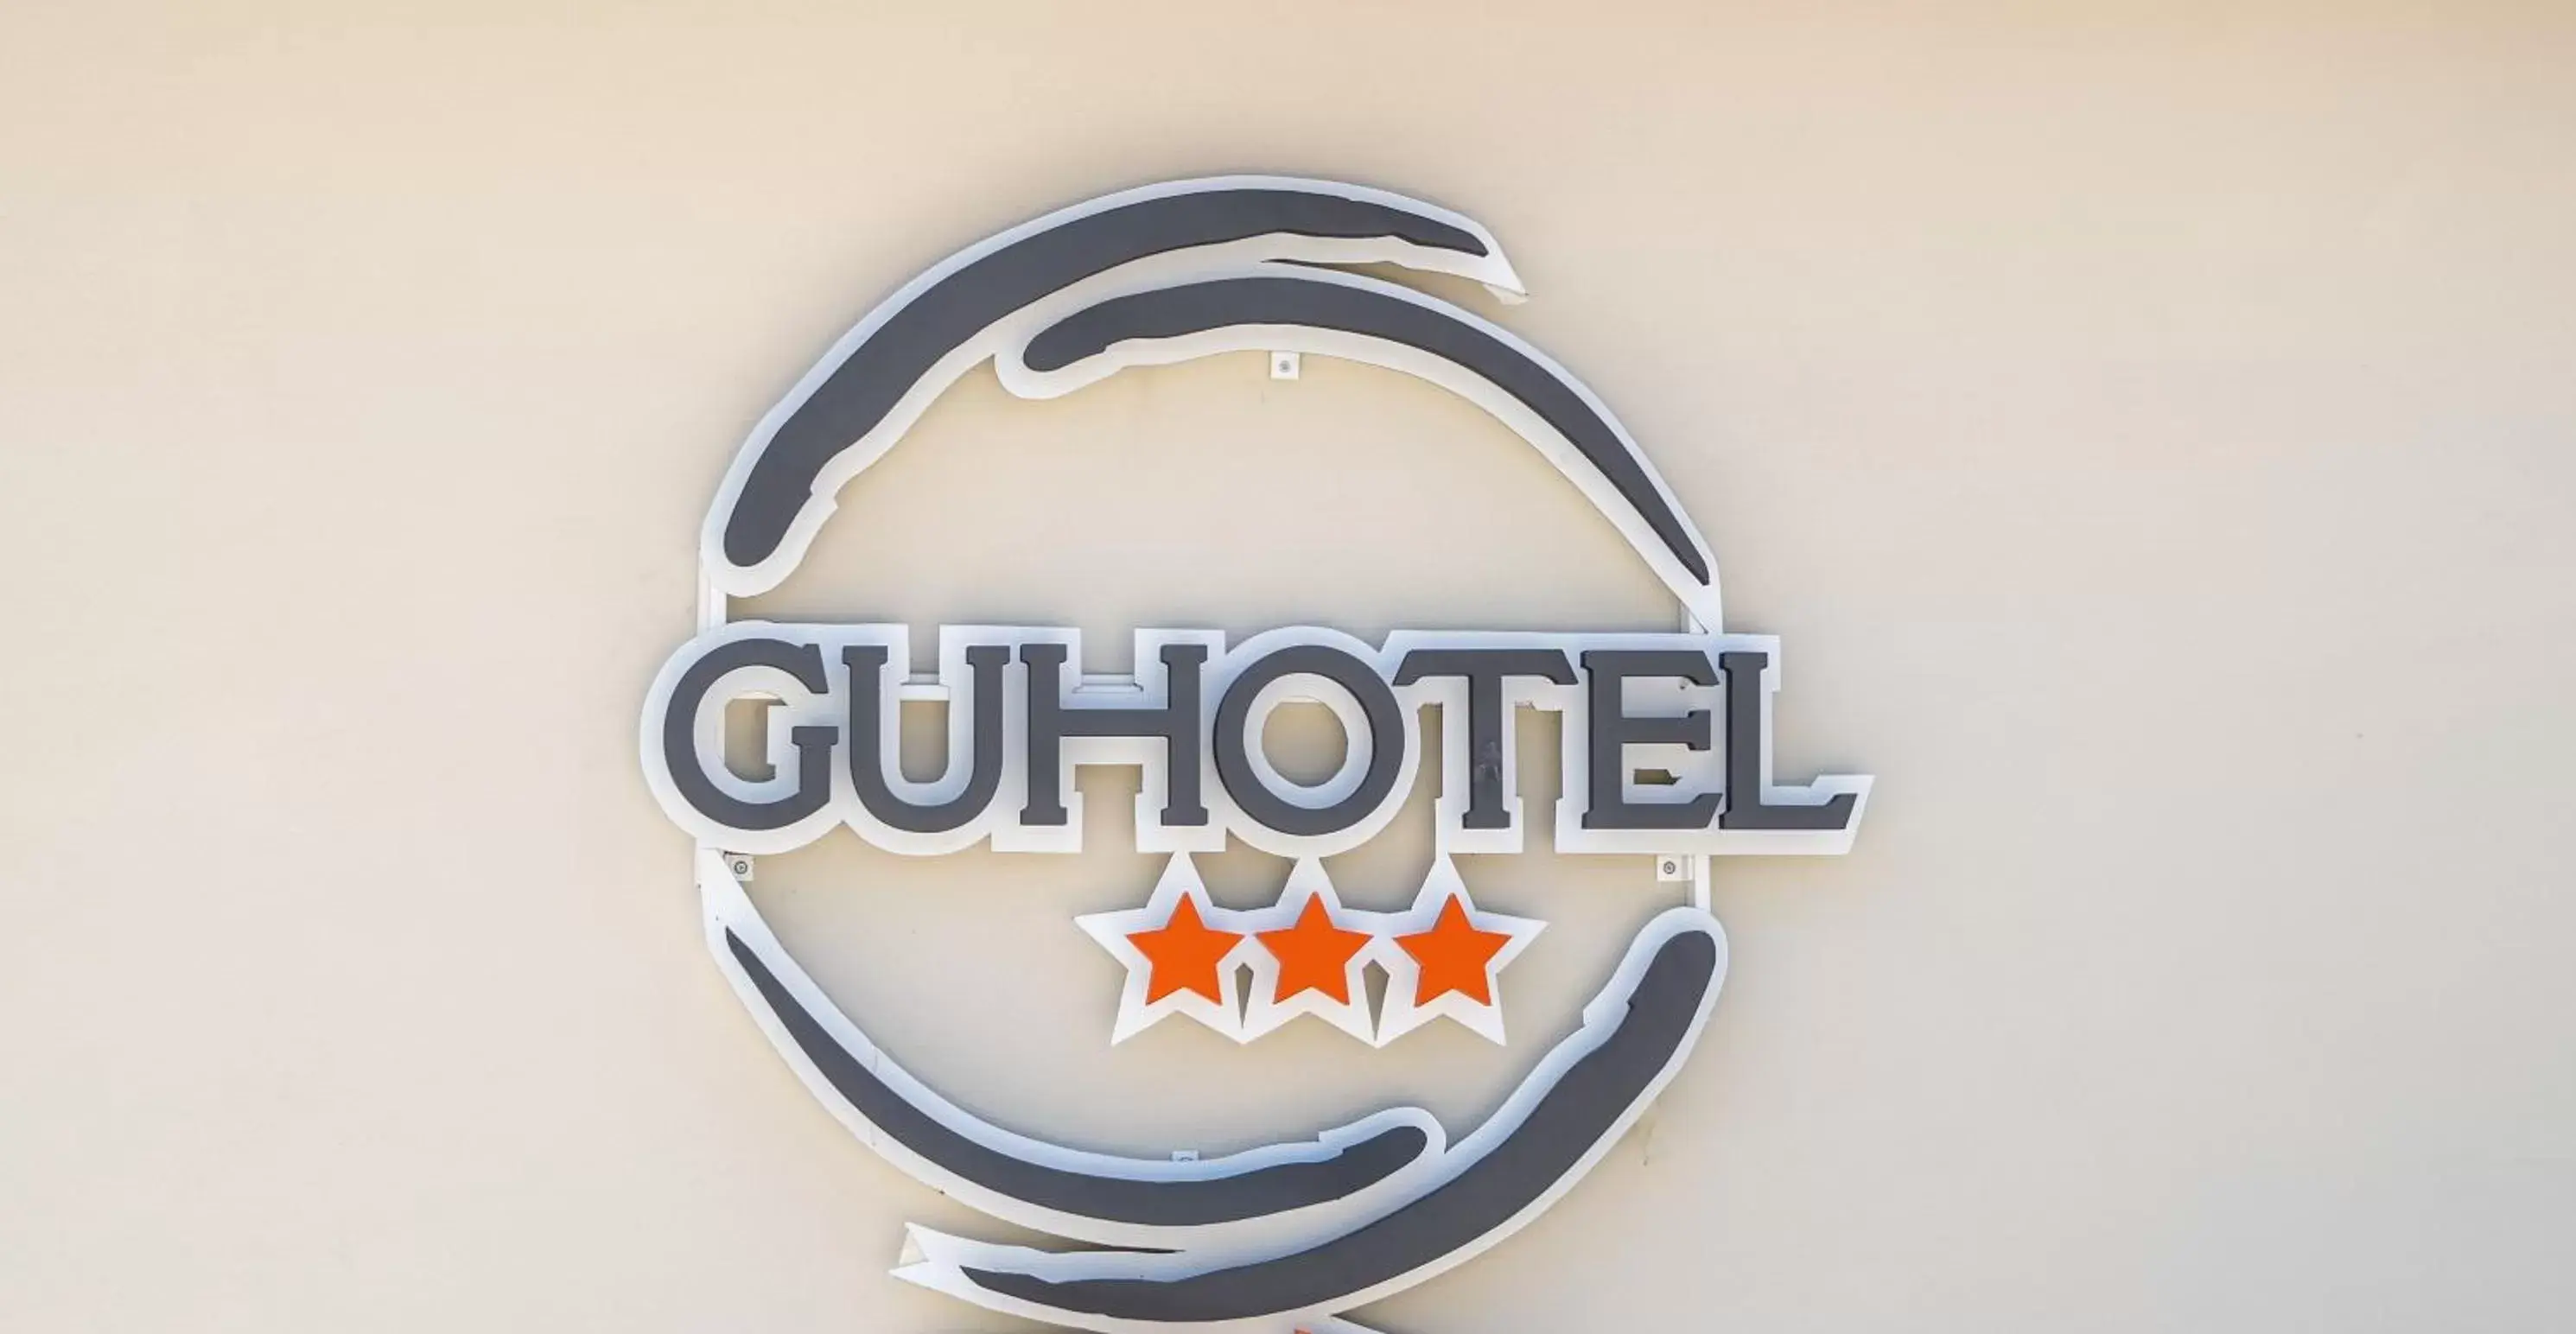 Property logo or sign in Gu Hotel